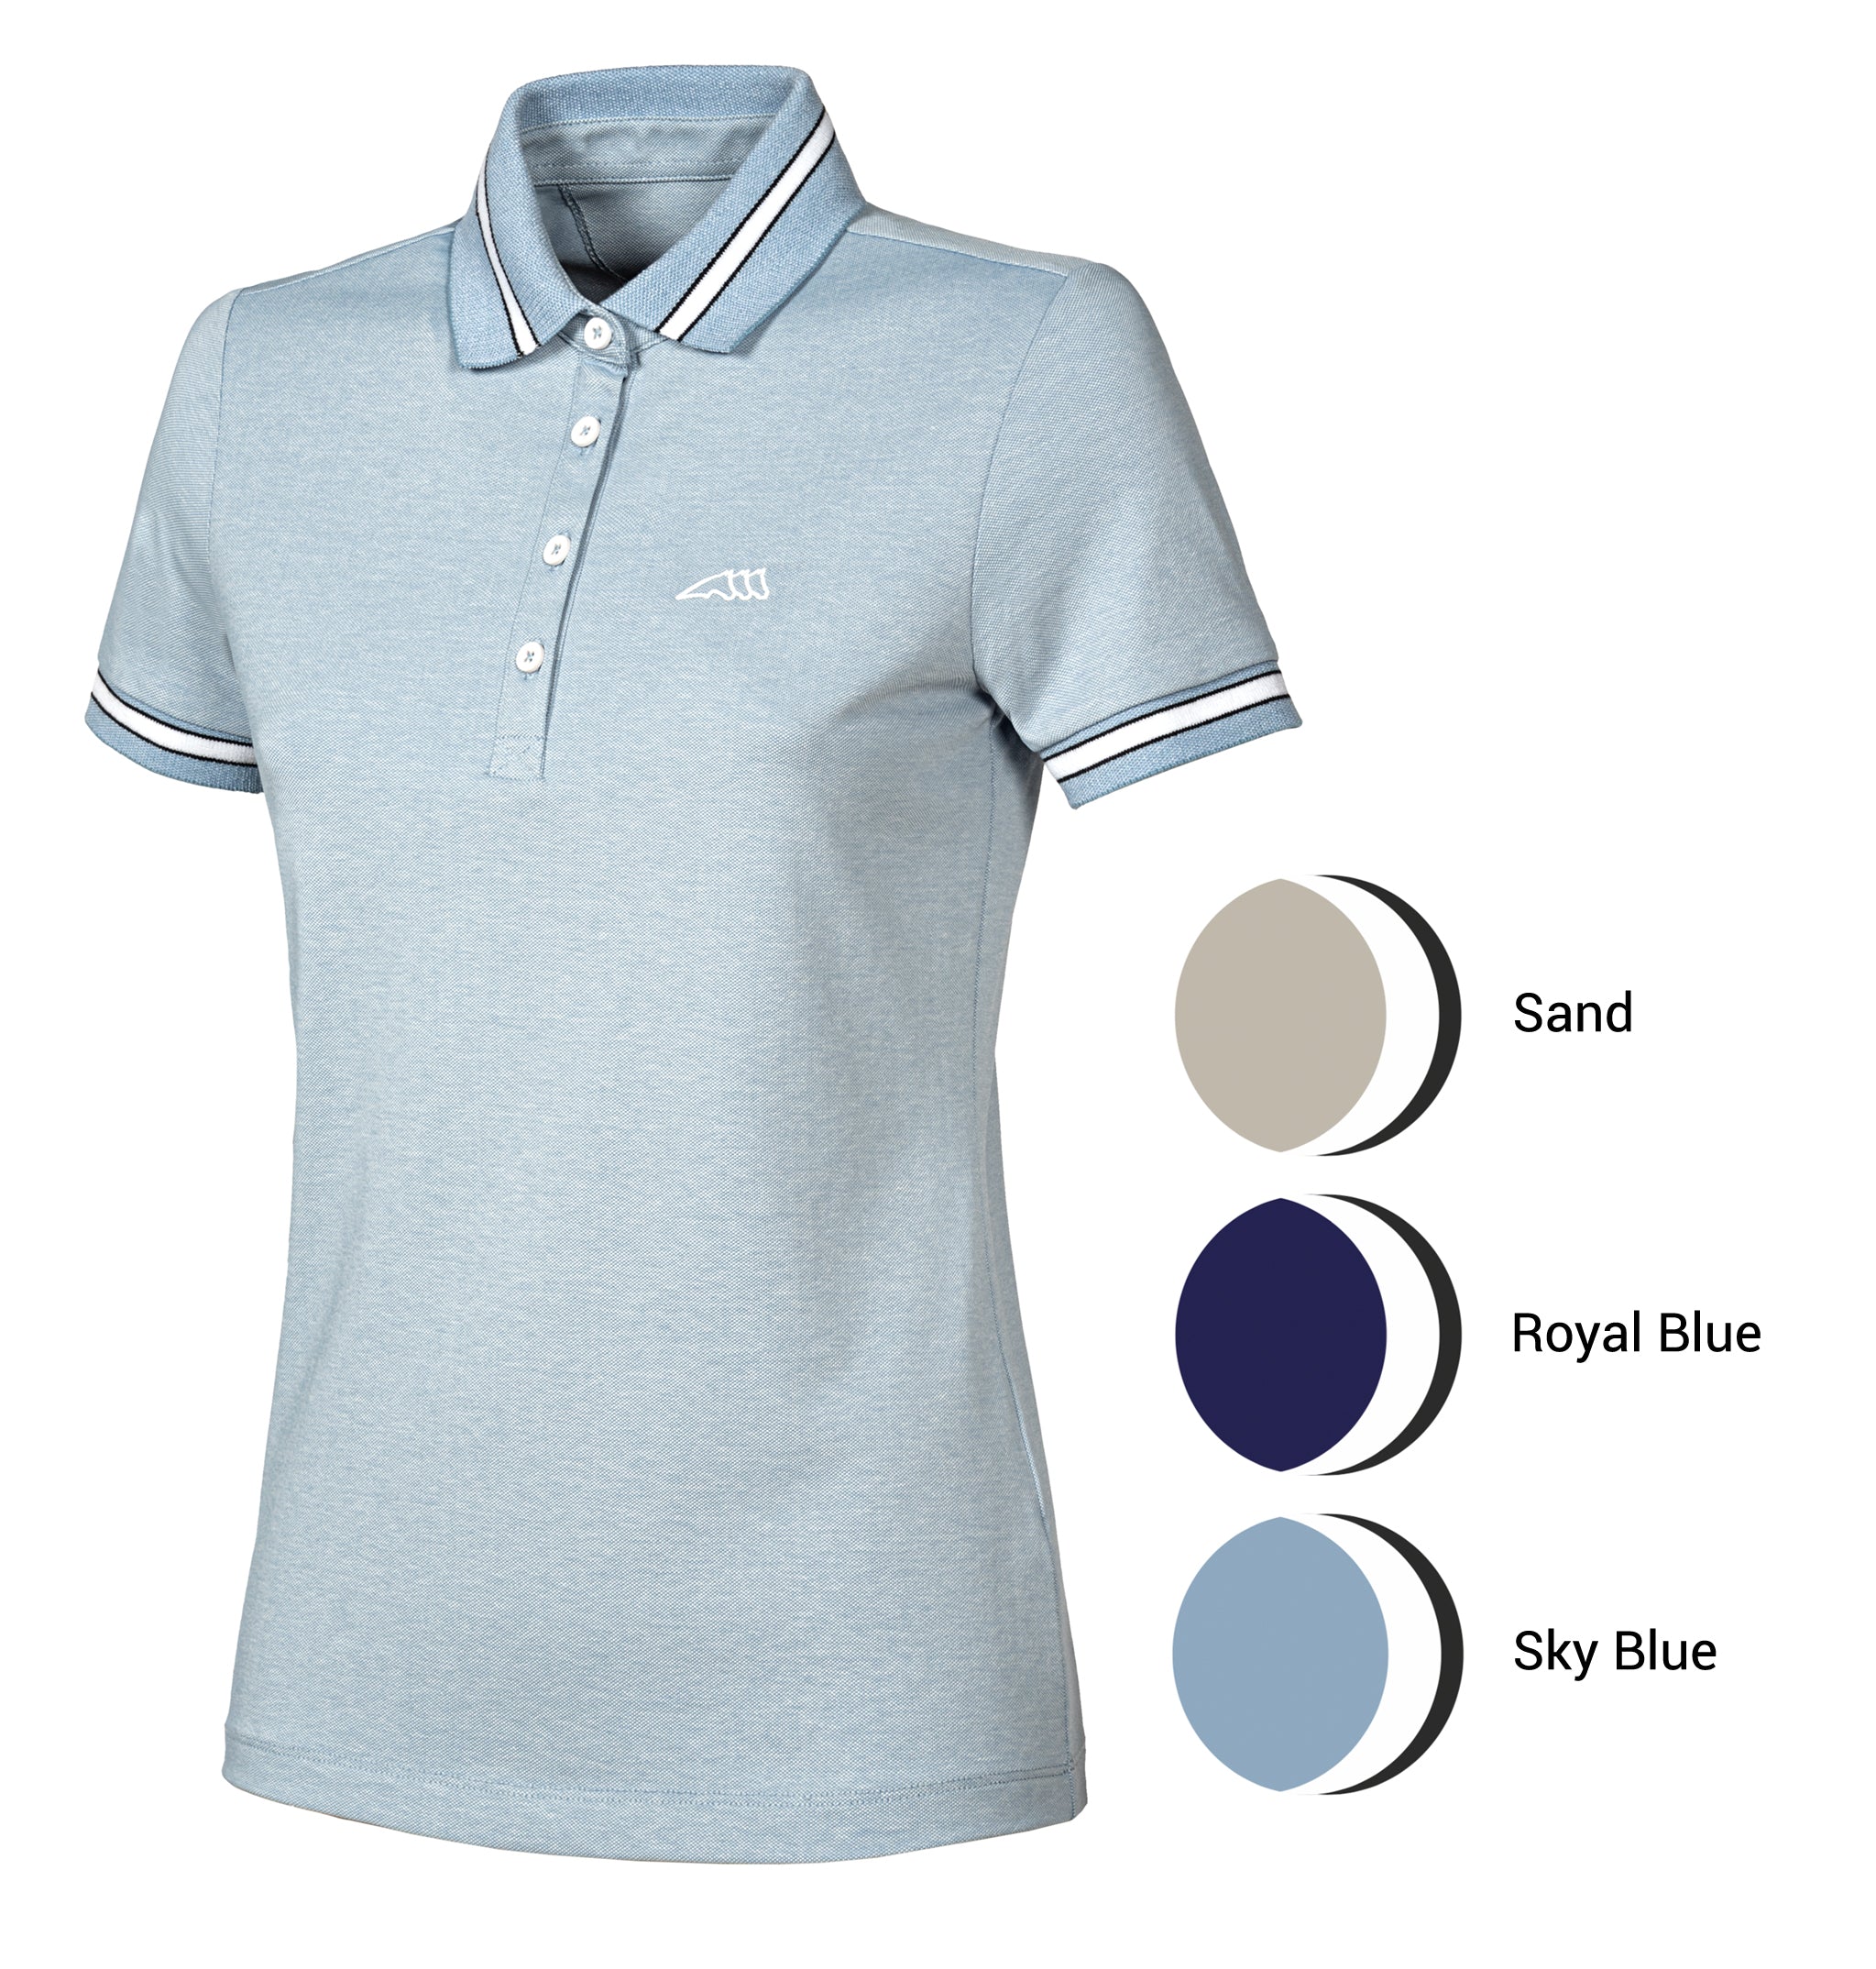 Equiline Elenoe Women’s Short Sleeve Polo Shirt - SALE